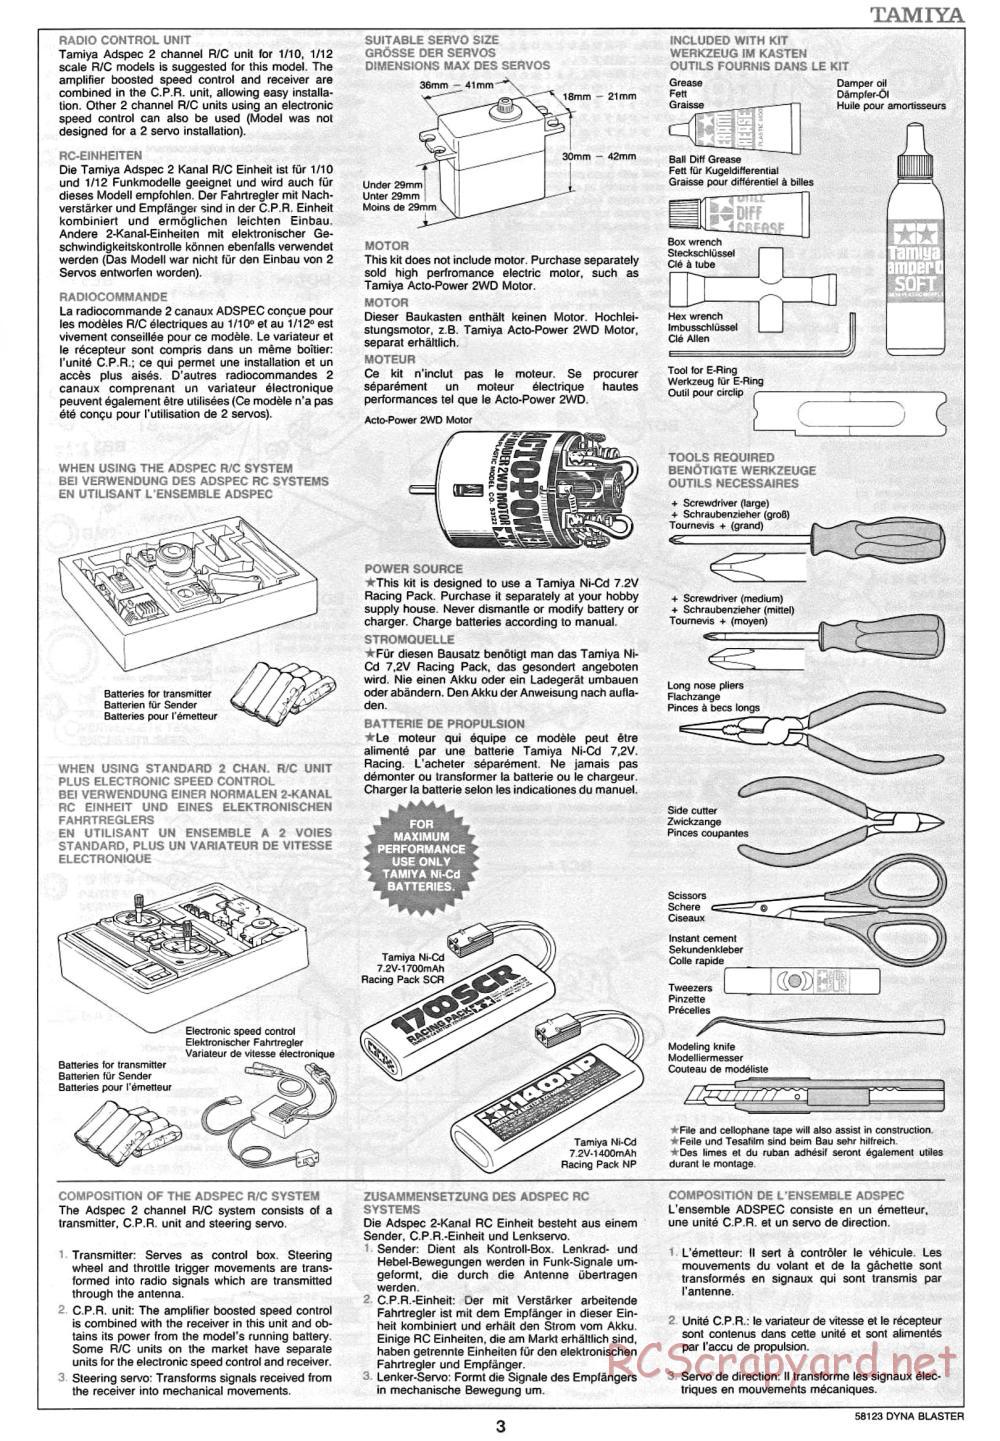 Tamiya - Dyna Blaster Chassis - Manual - Page 3